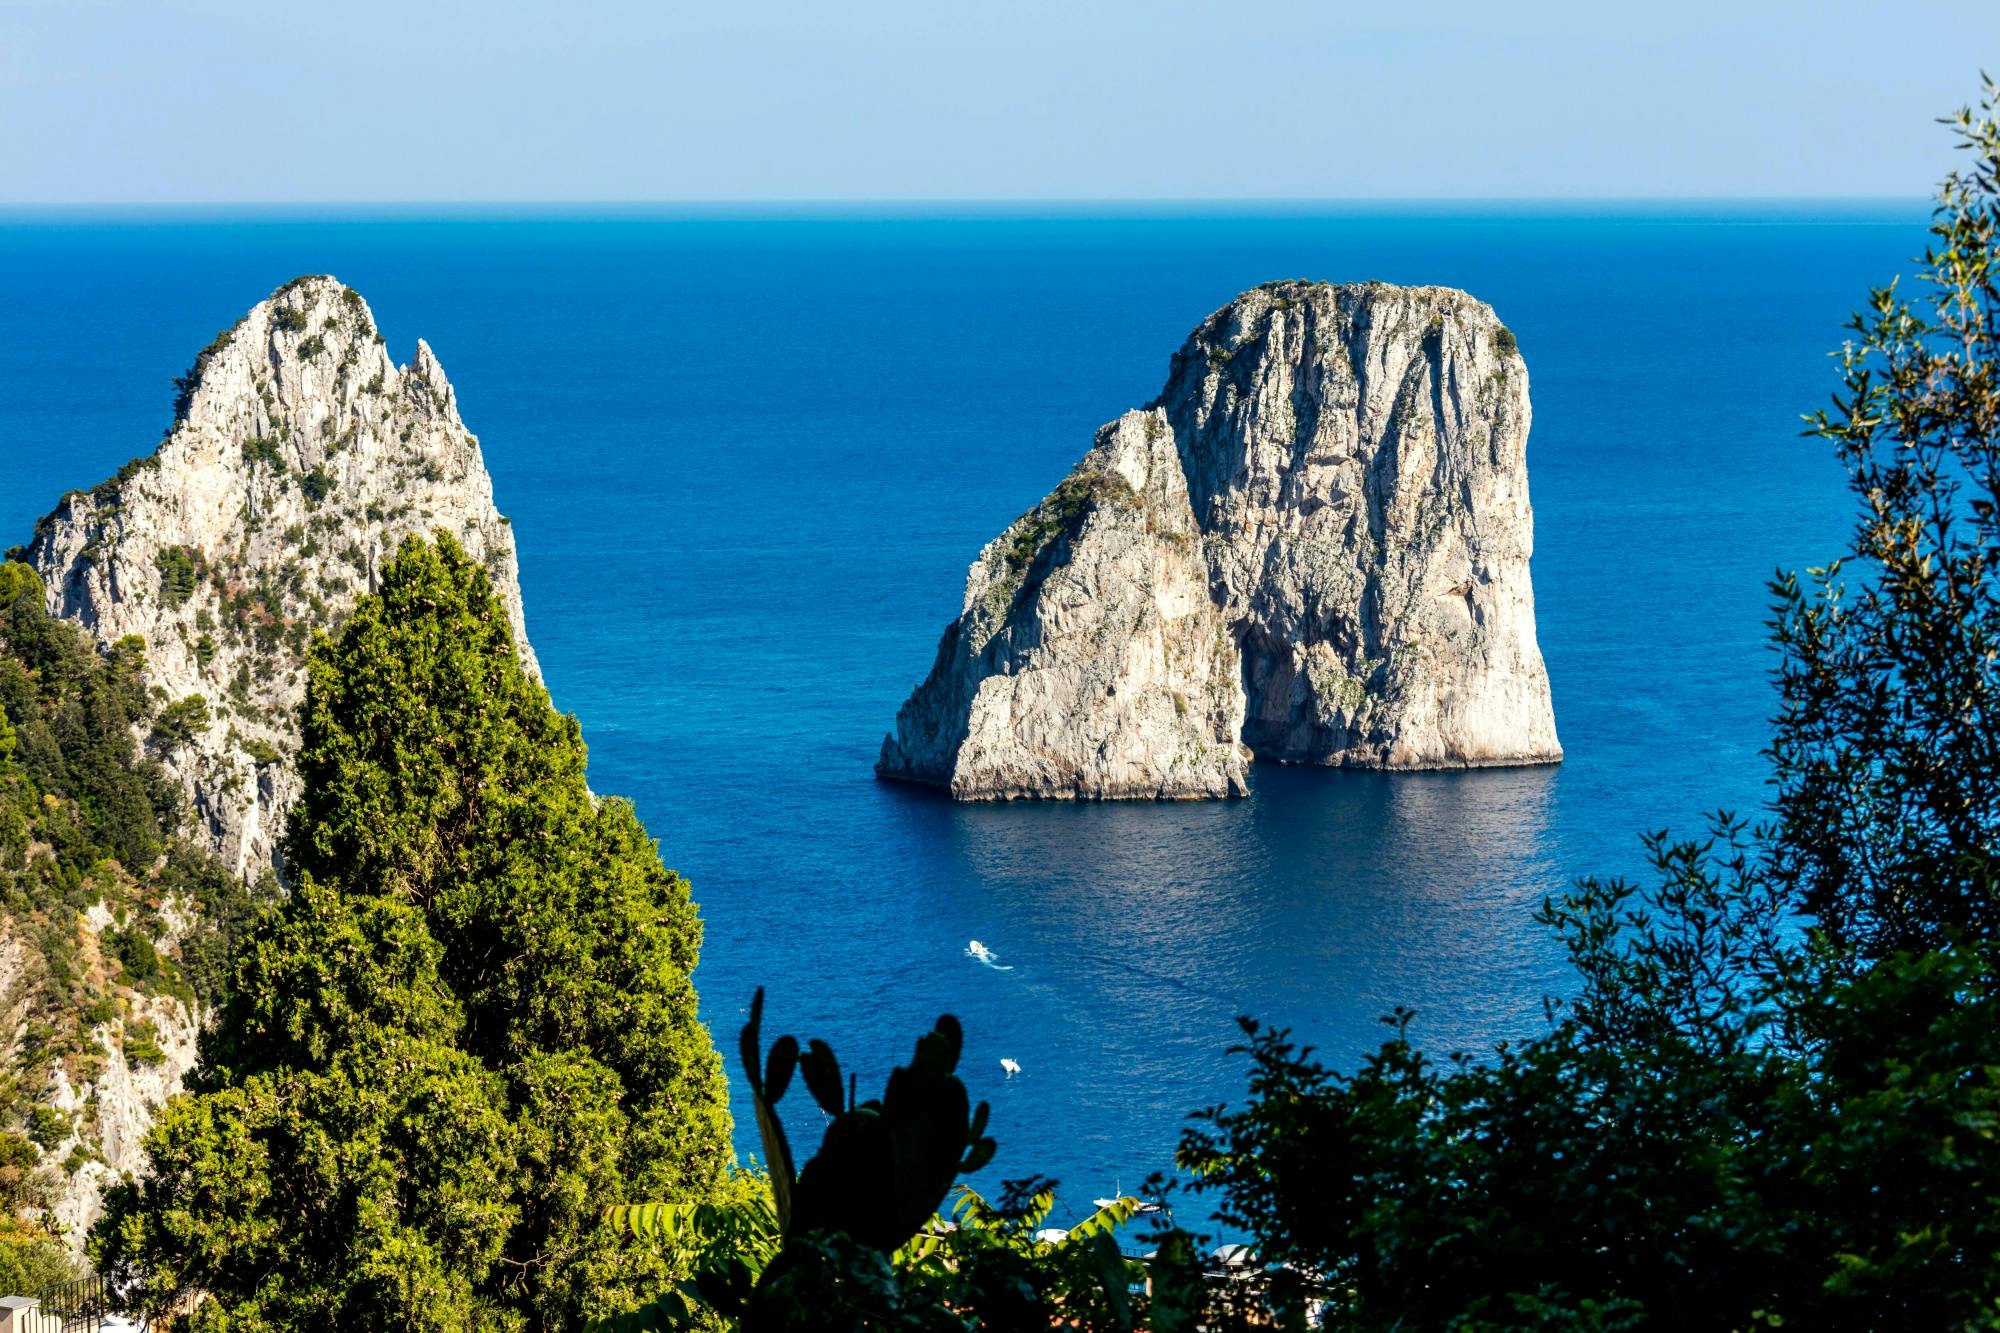 Capri Cruise from Sorrento